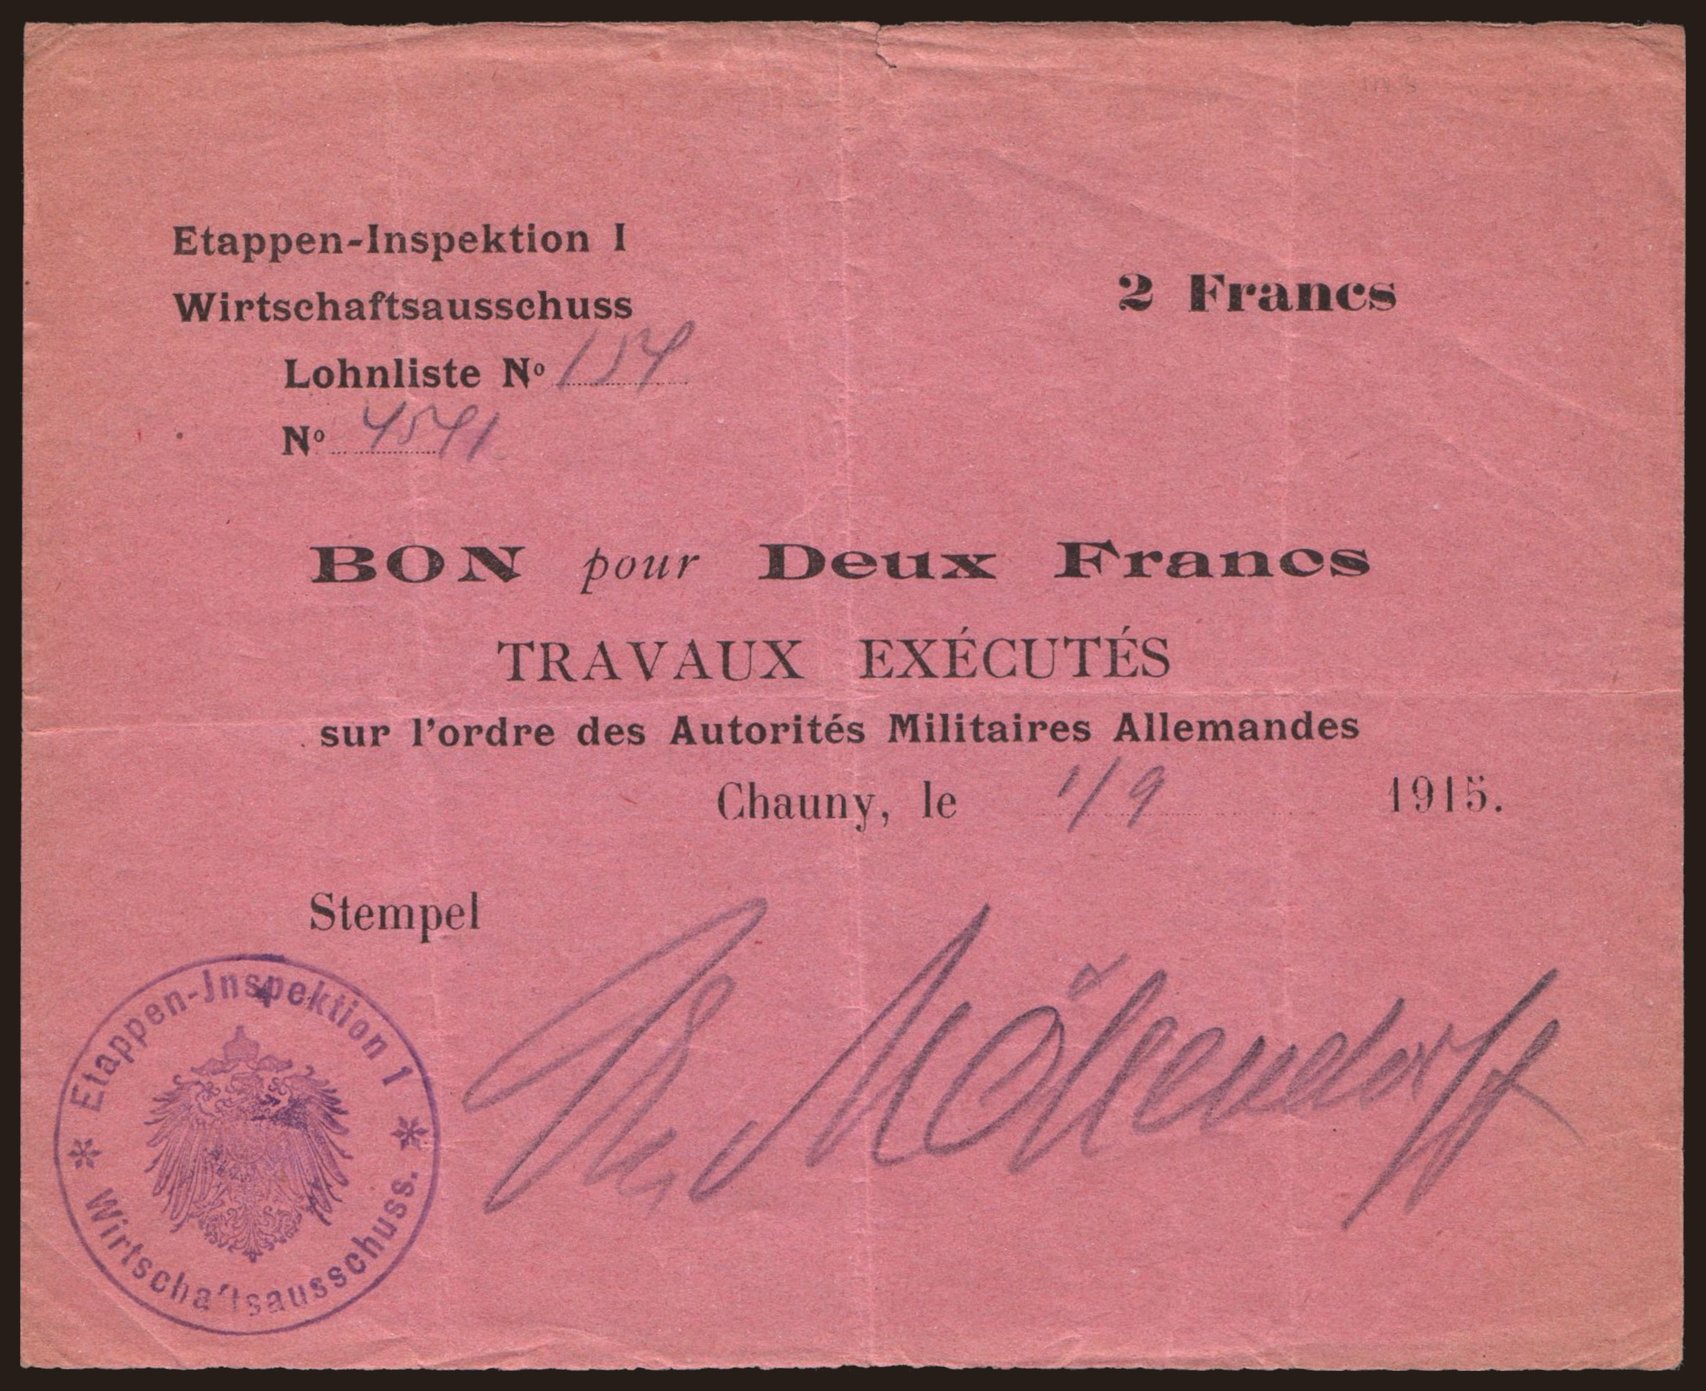 Etappen-Inspektion I, 2 francs, 1915